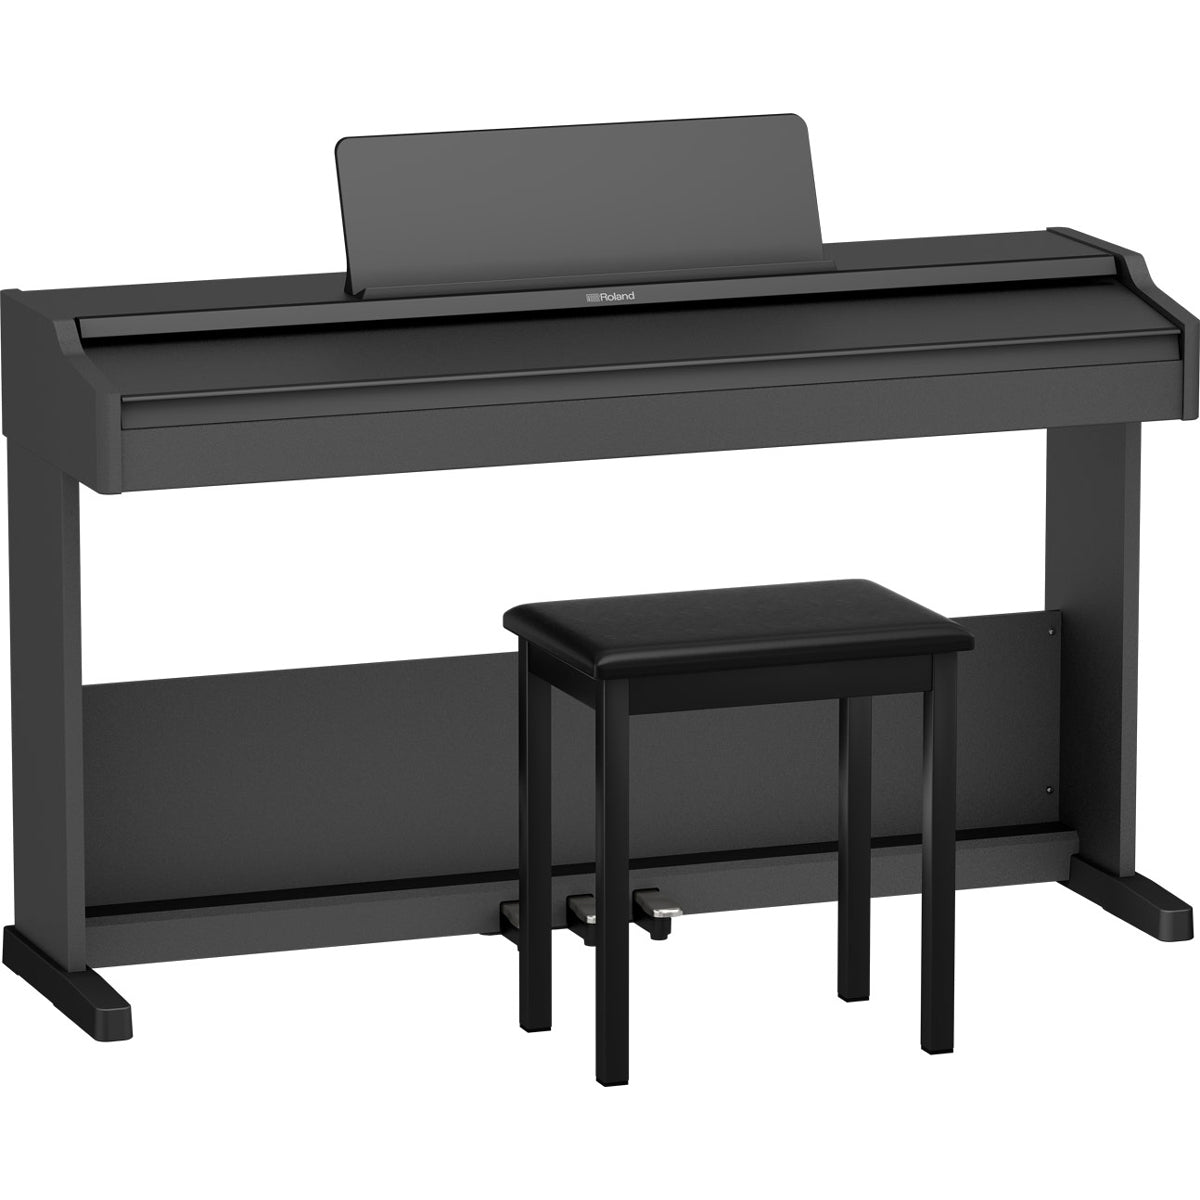 Roland RP107 BK 88-Keys Digital Piano - Black